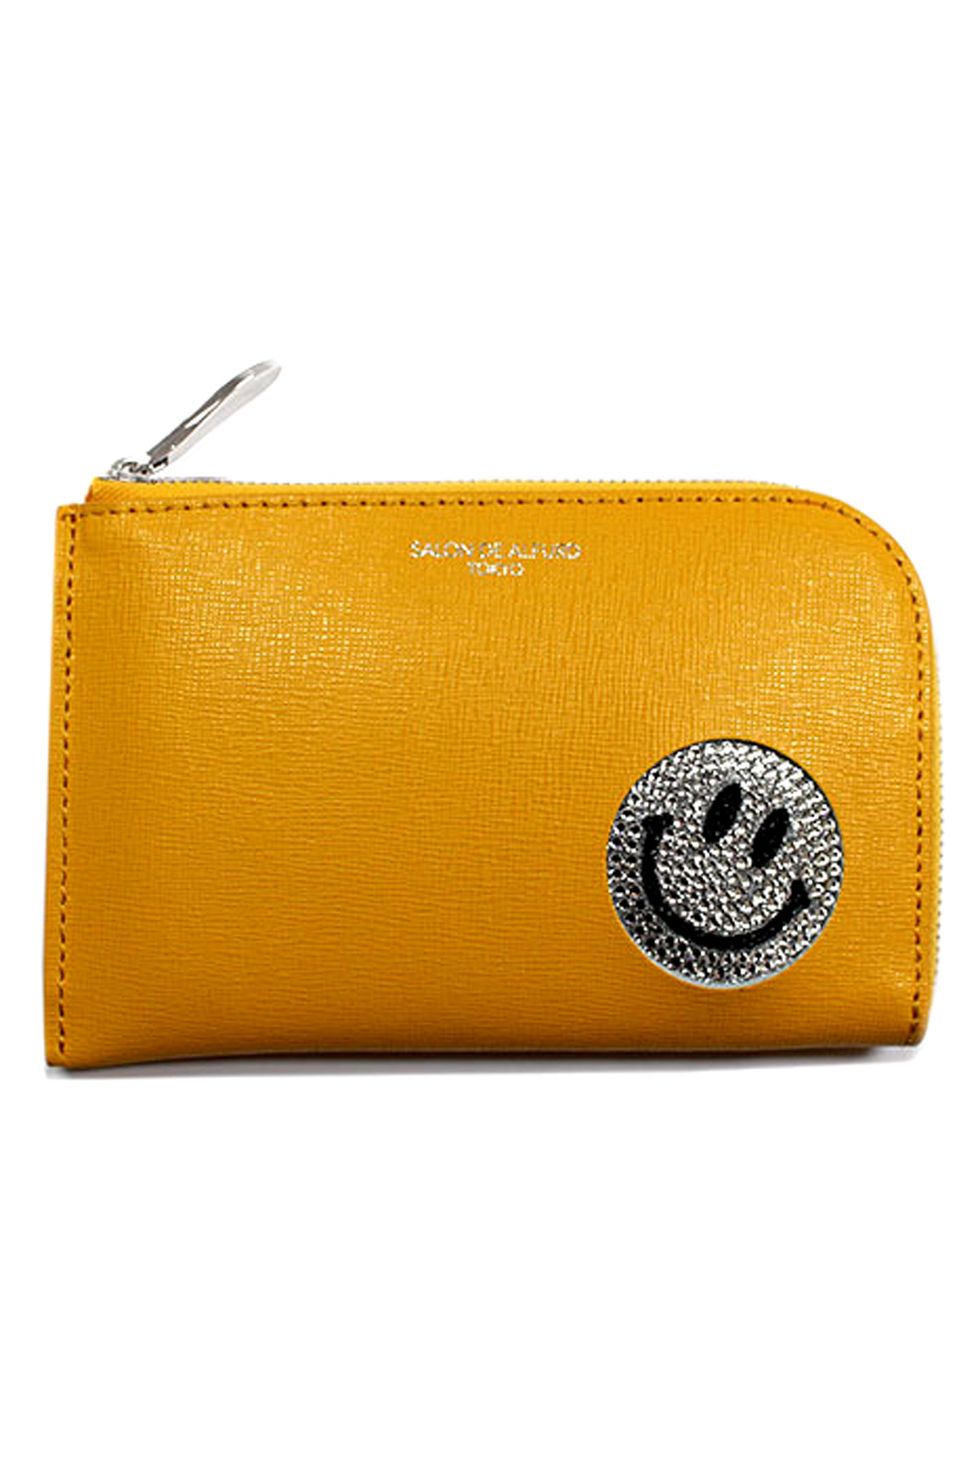 Wallet, Yellow, Coin purse, Fashion accessory, Wristlet, Leather, Handbag, Rectangle, Bag, 